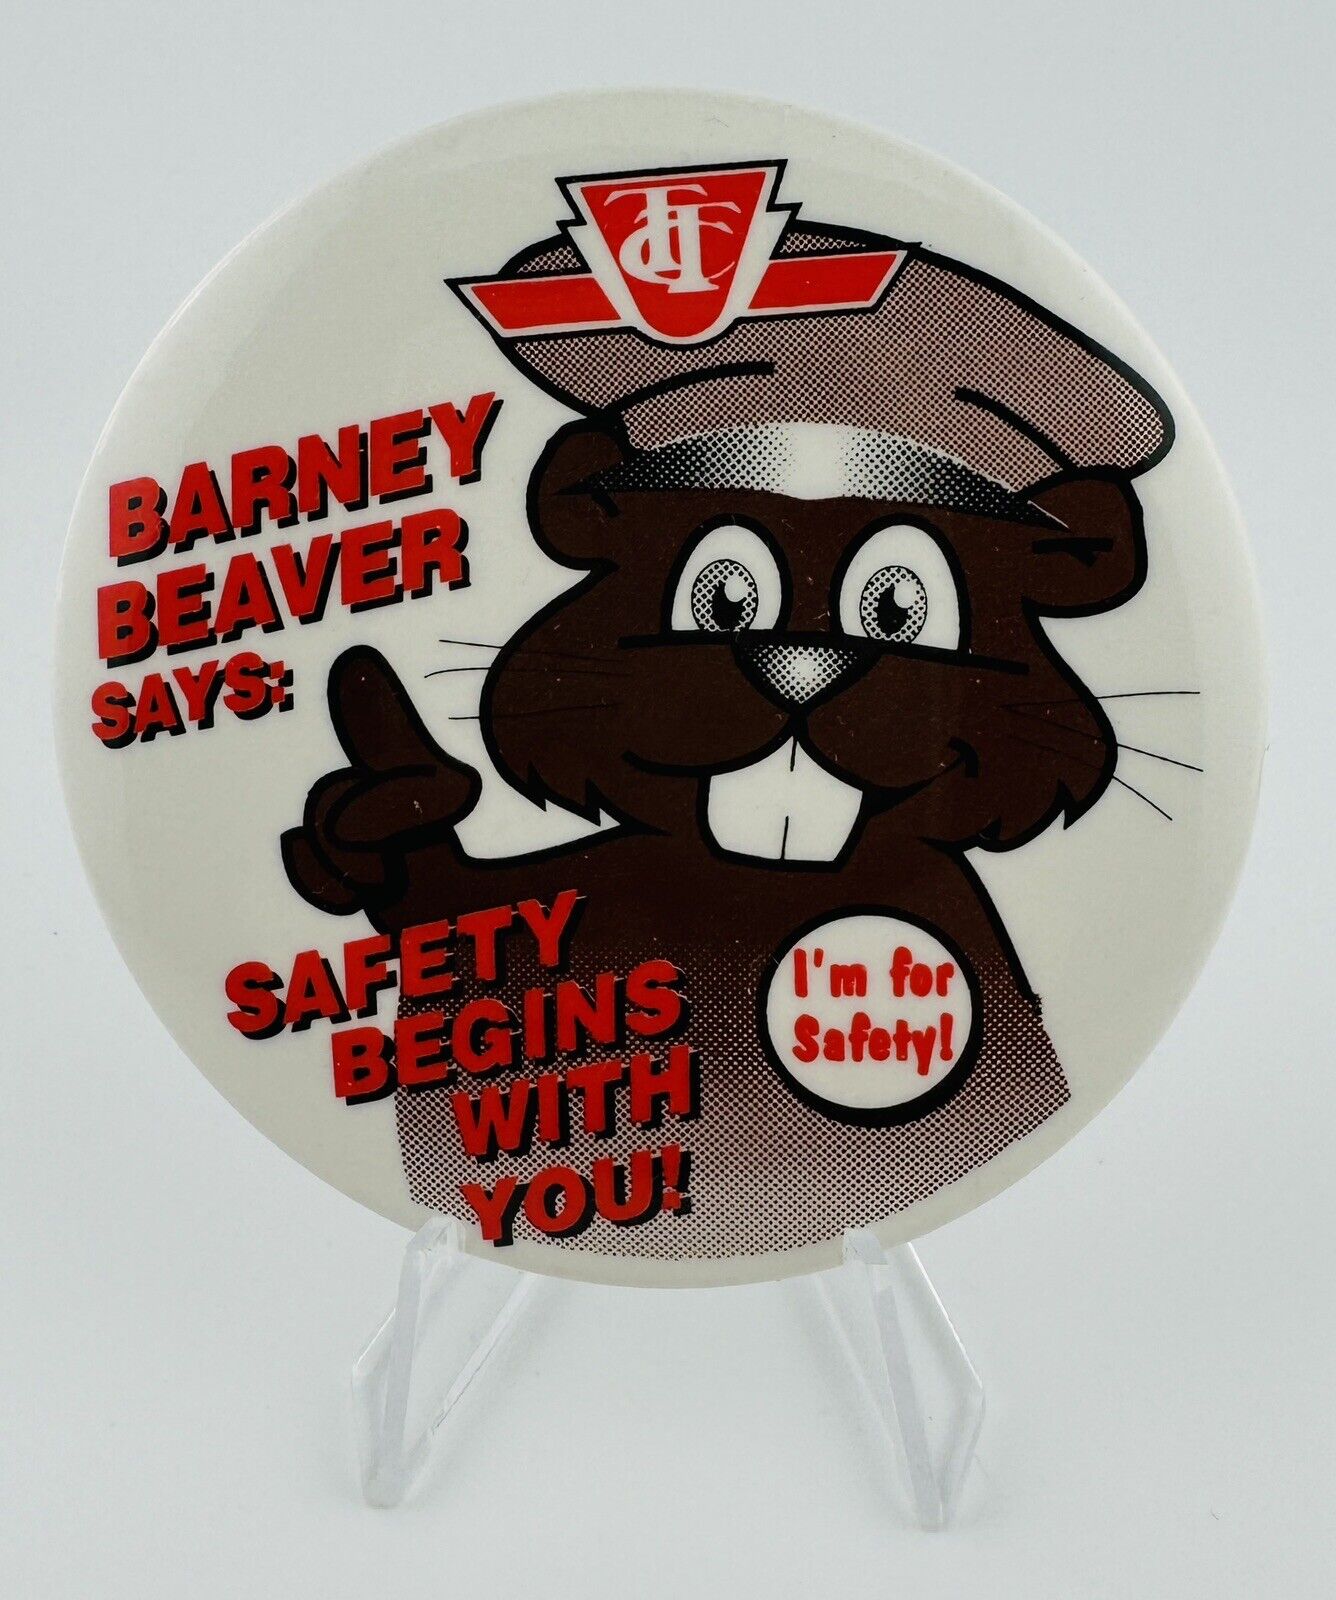 Vintage Toronto Transit Commission Barney Beaver Safety Begins With You